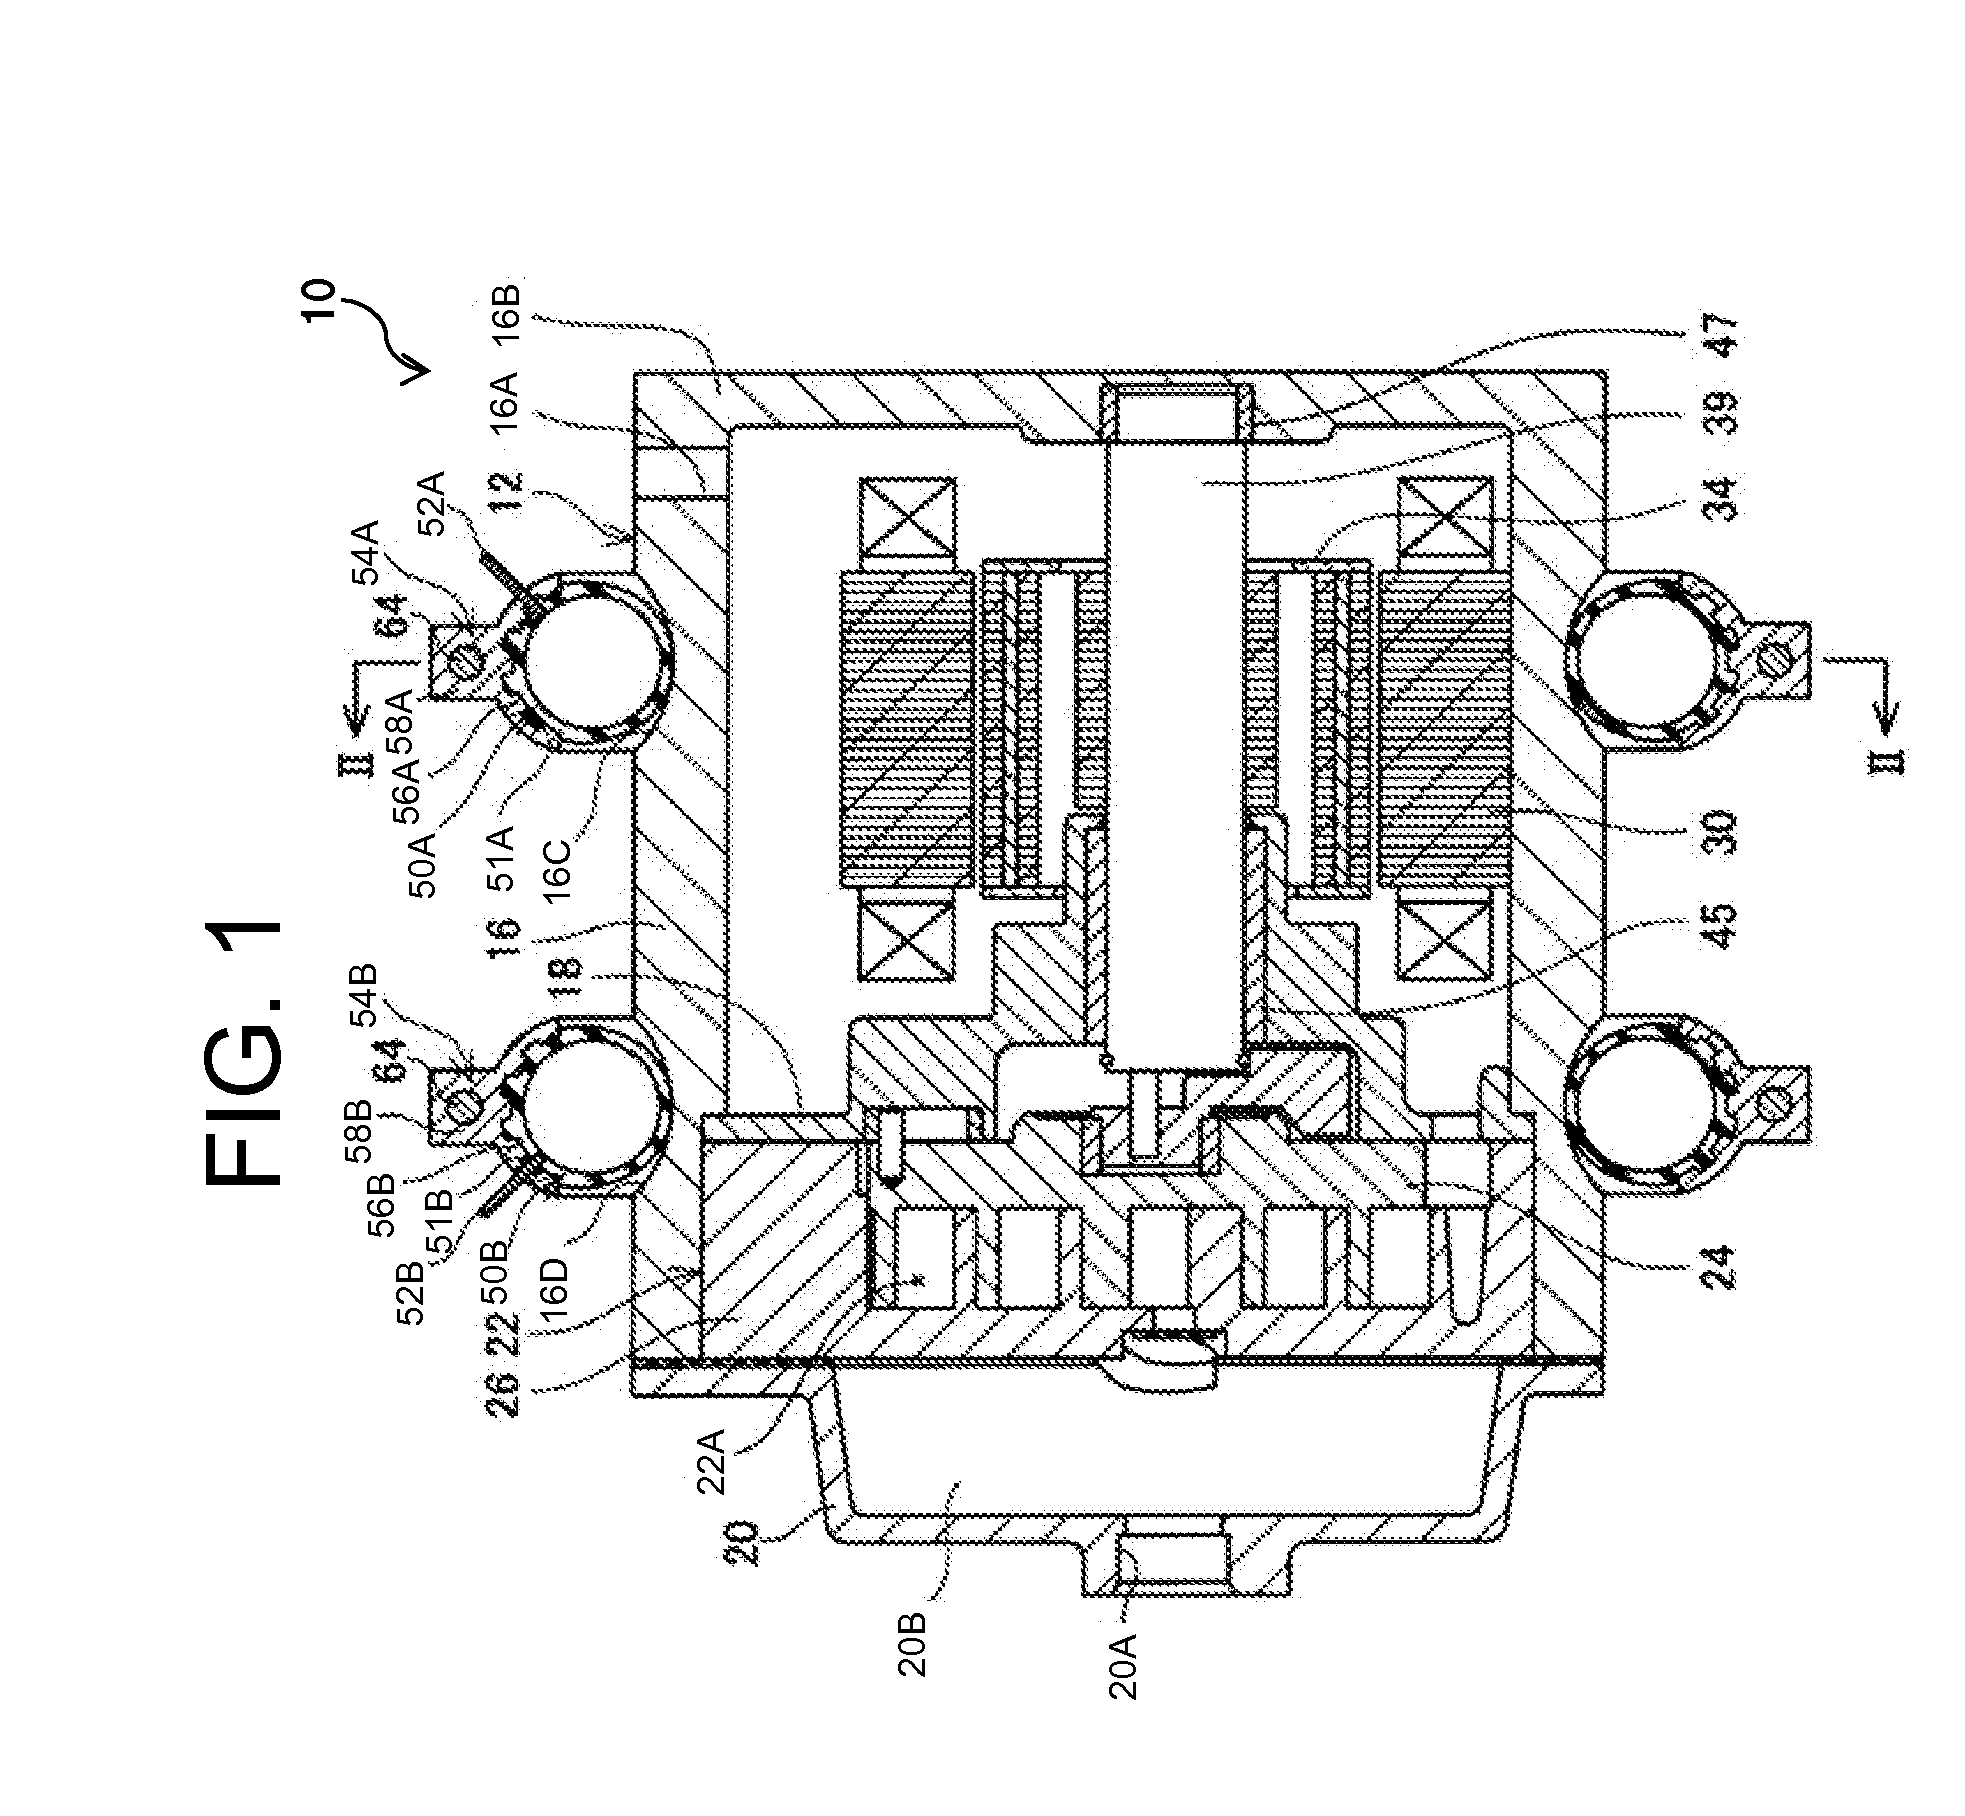 Electric compressor